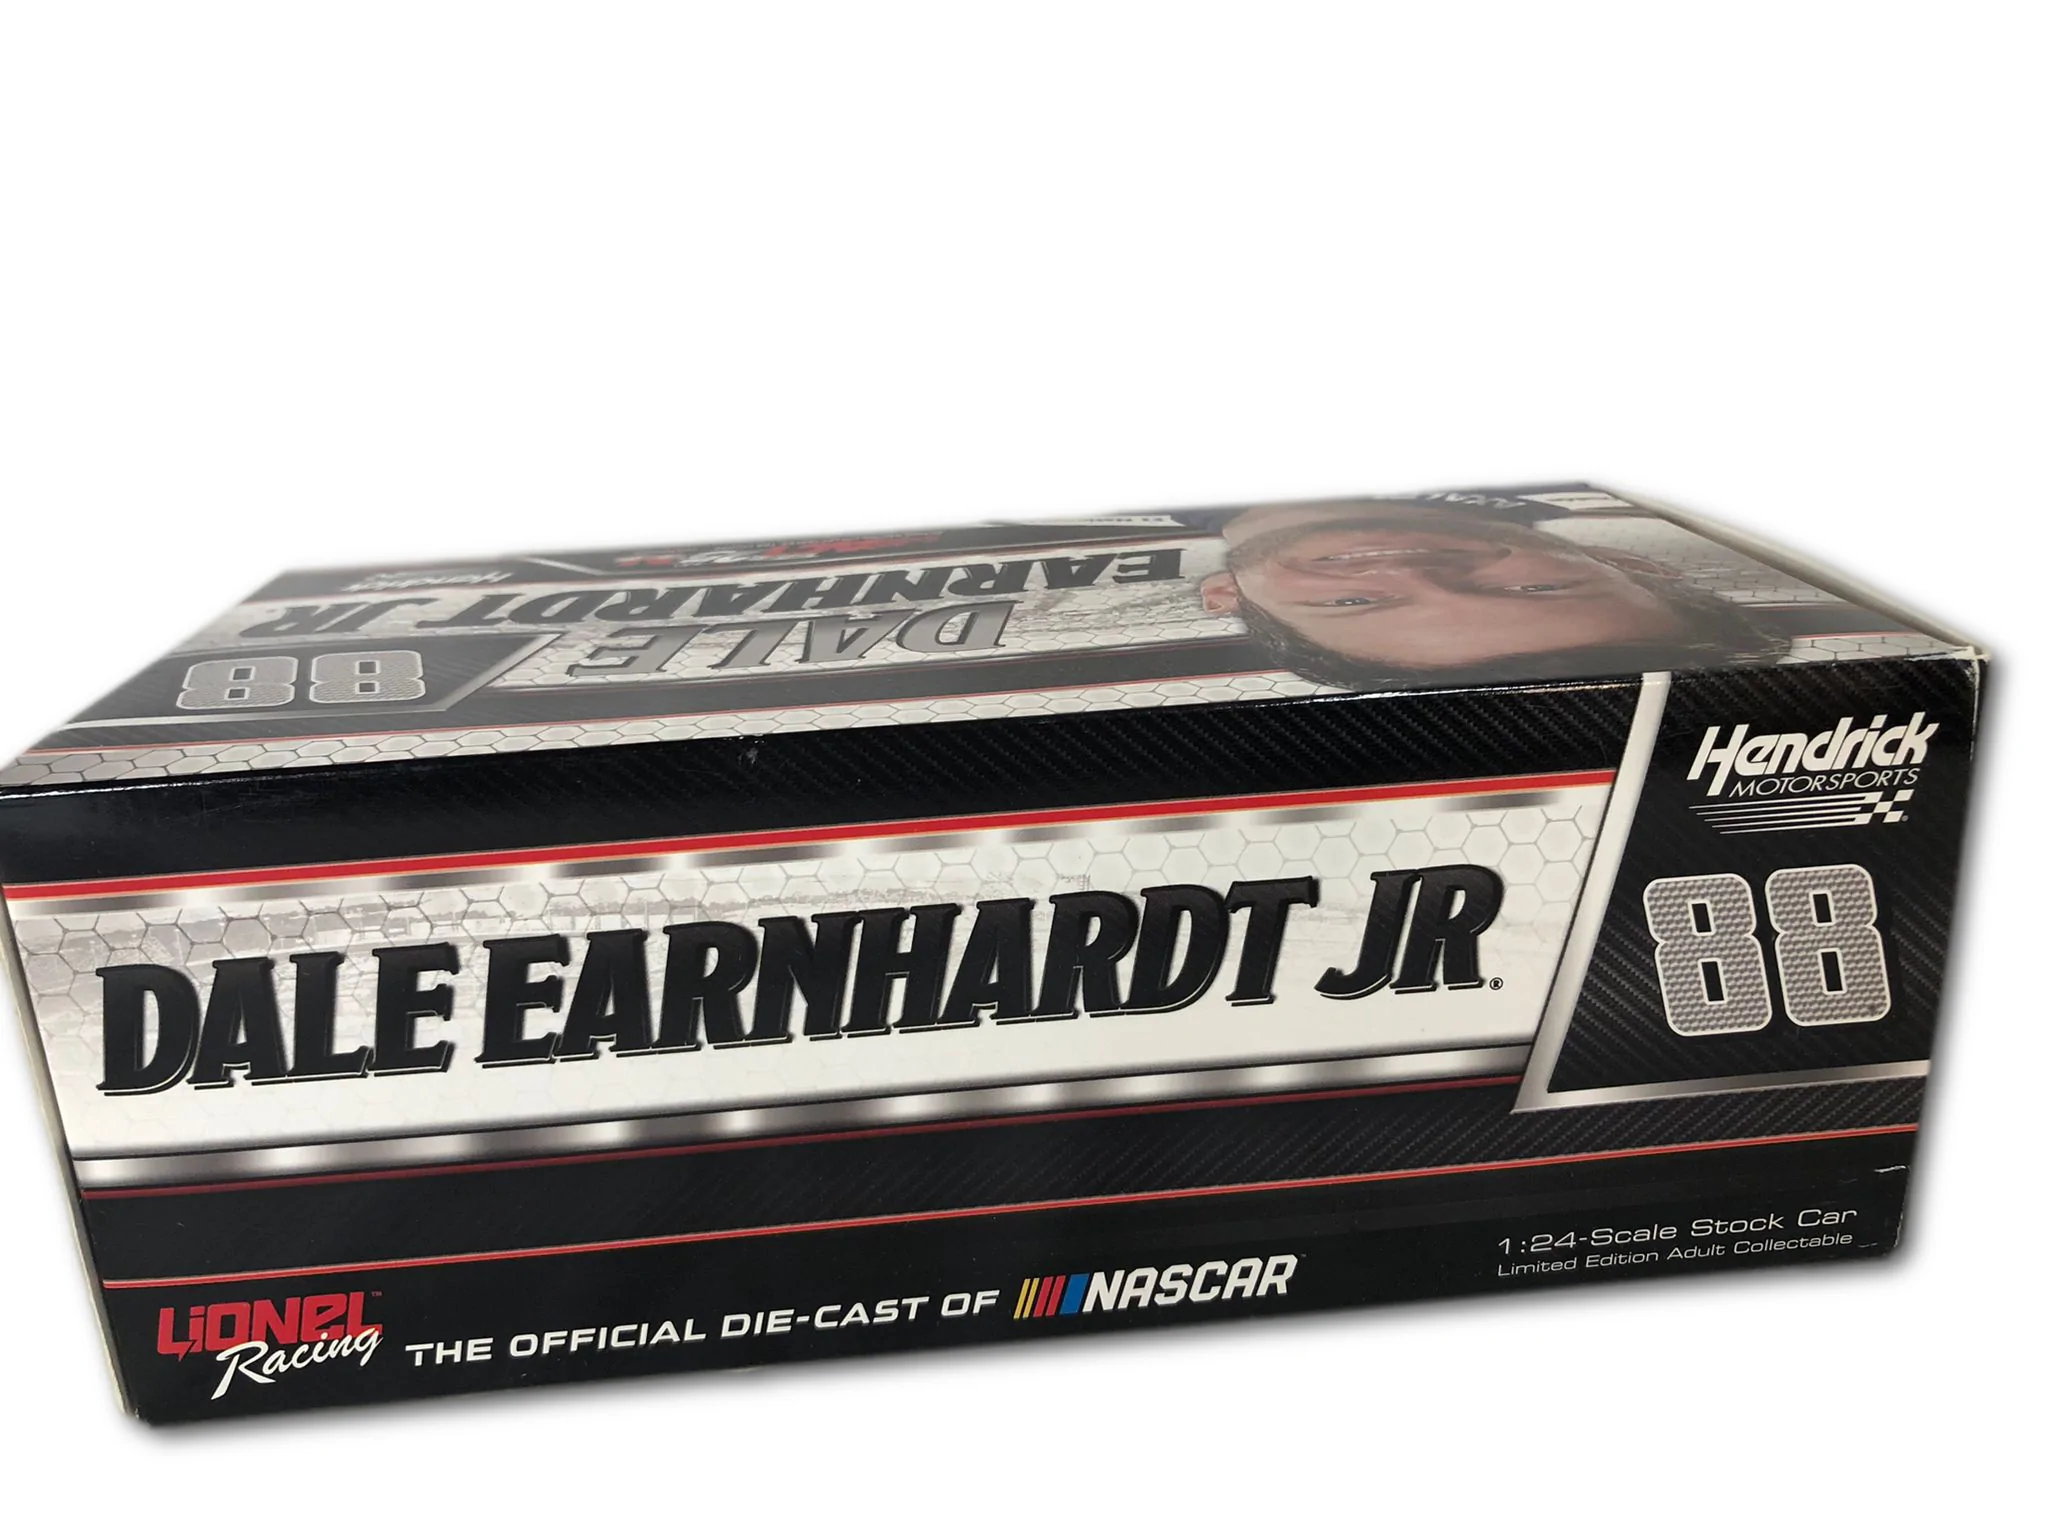 Dale Earnhardt Jr. Axalta 1:24 Die Cast Car